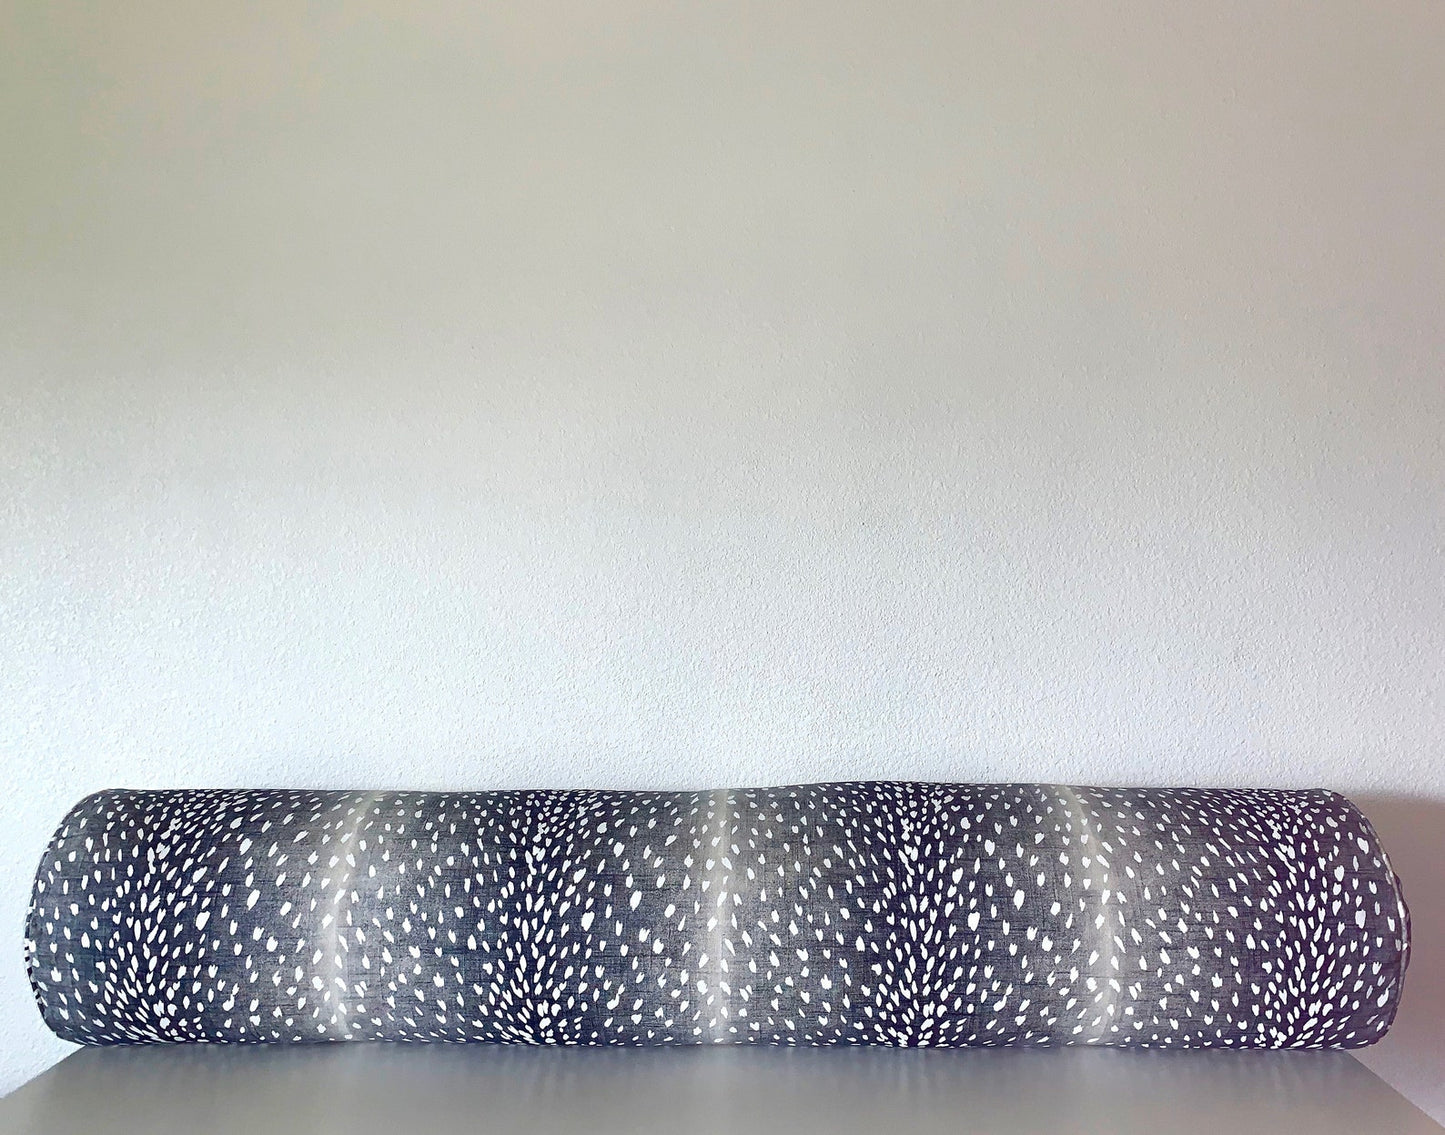 Ballard Designs Antelope Pillow Cover in Navy - Available in Bolster, Lumbar, Throw, Euro Sham Sizes